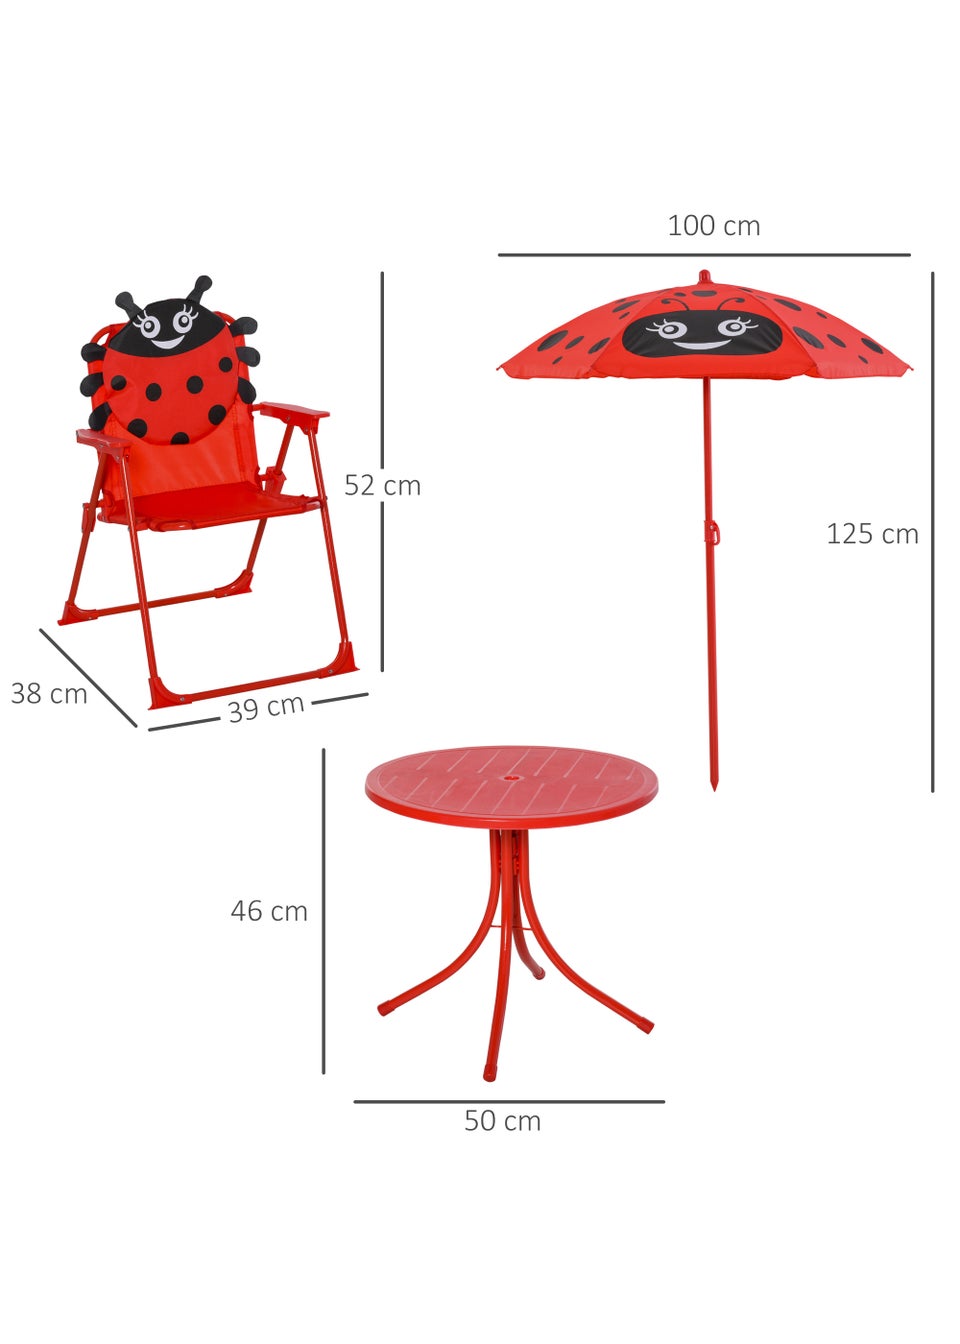 Outsunny Kids Ladybird Folding Picnic Table